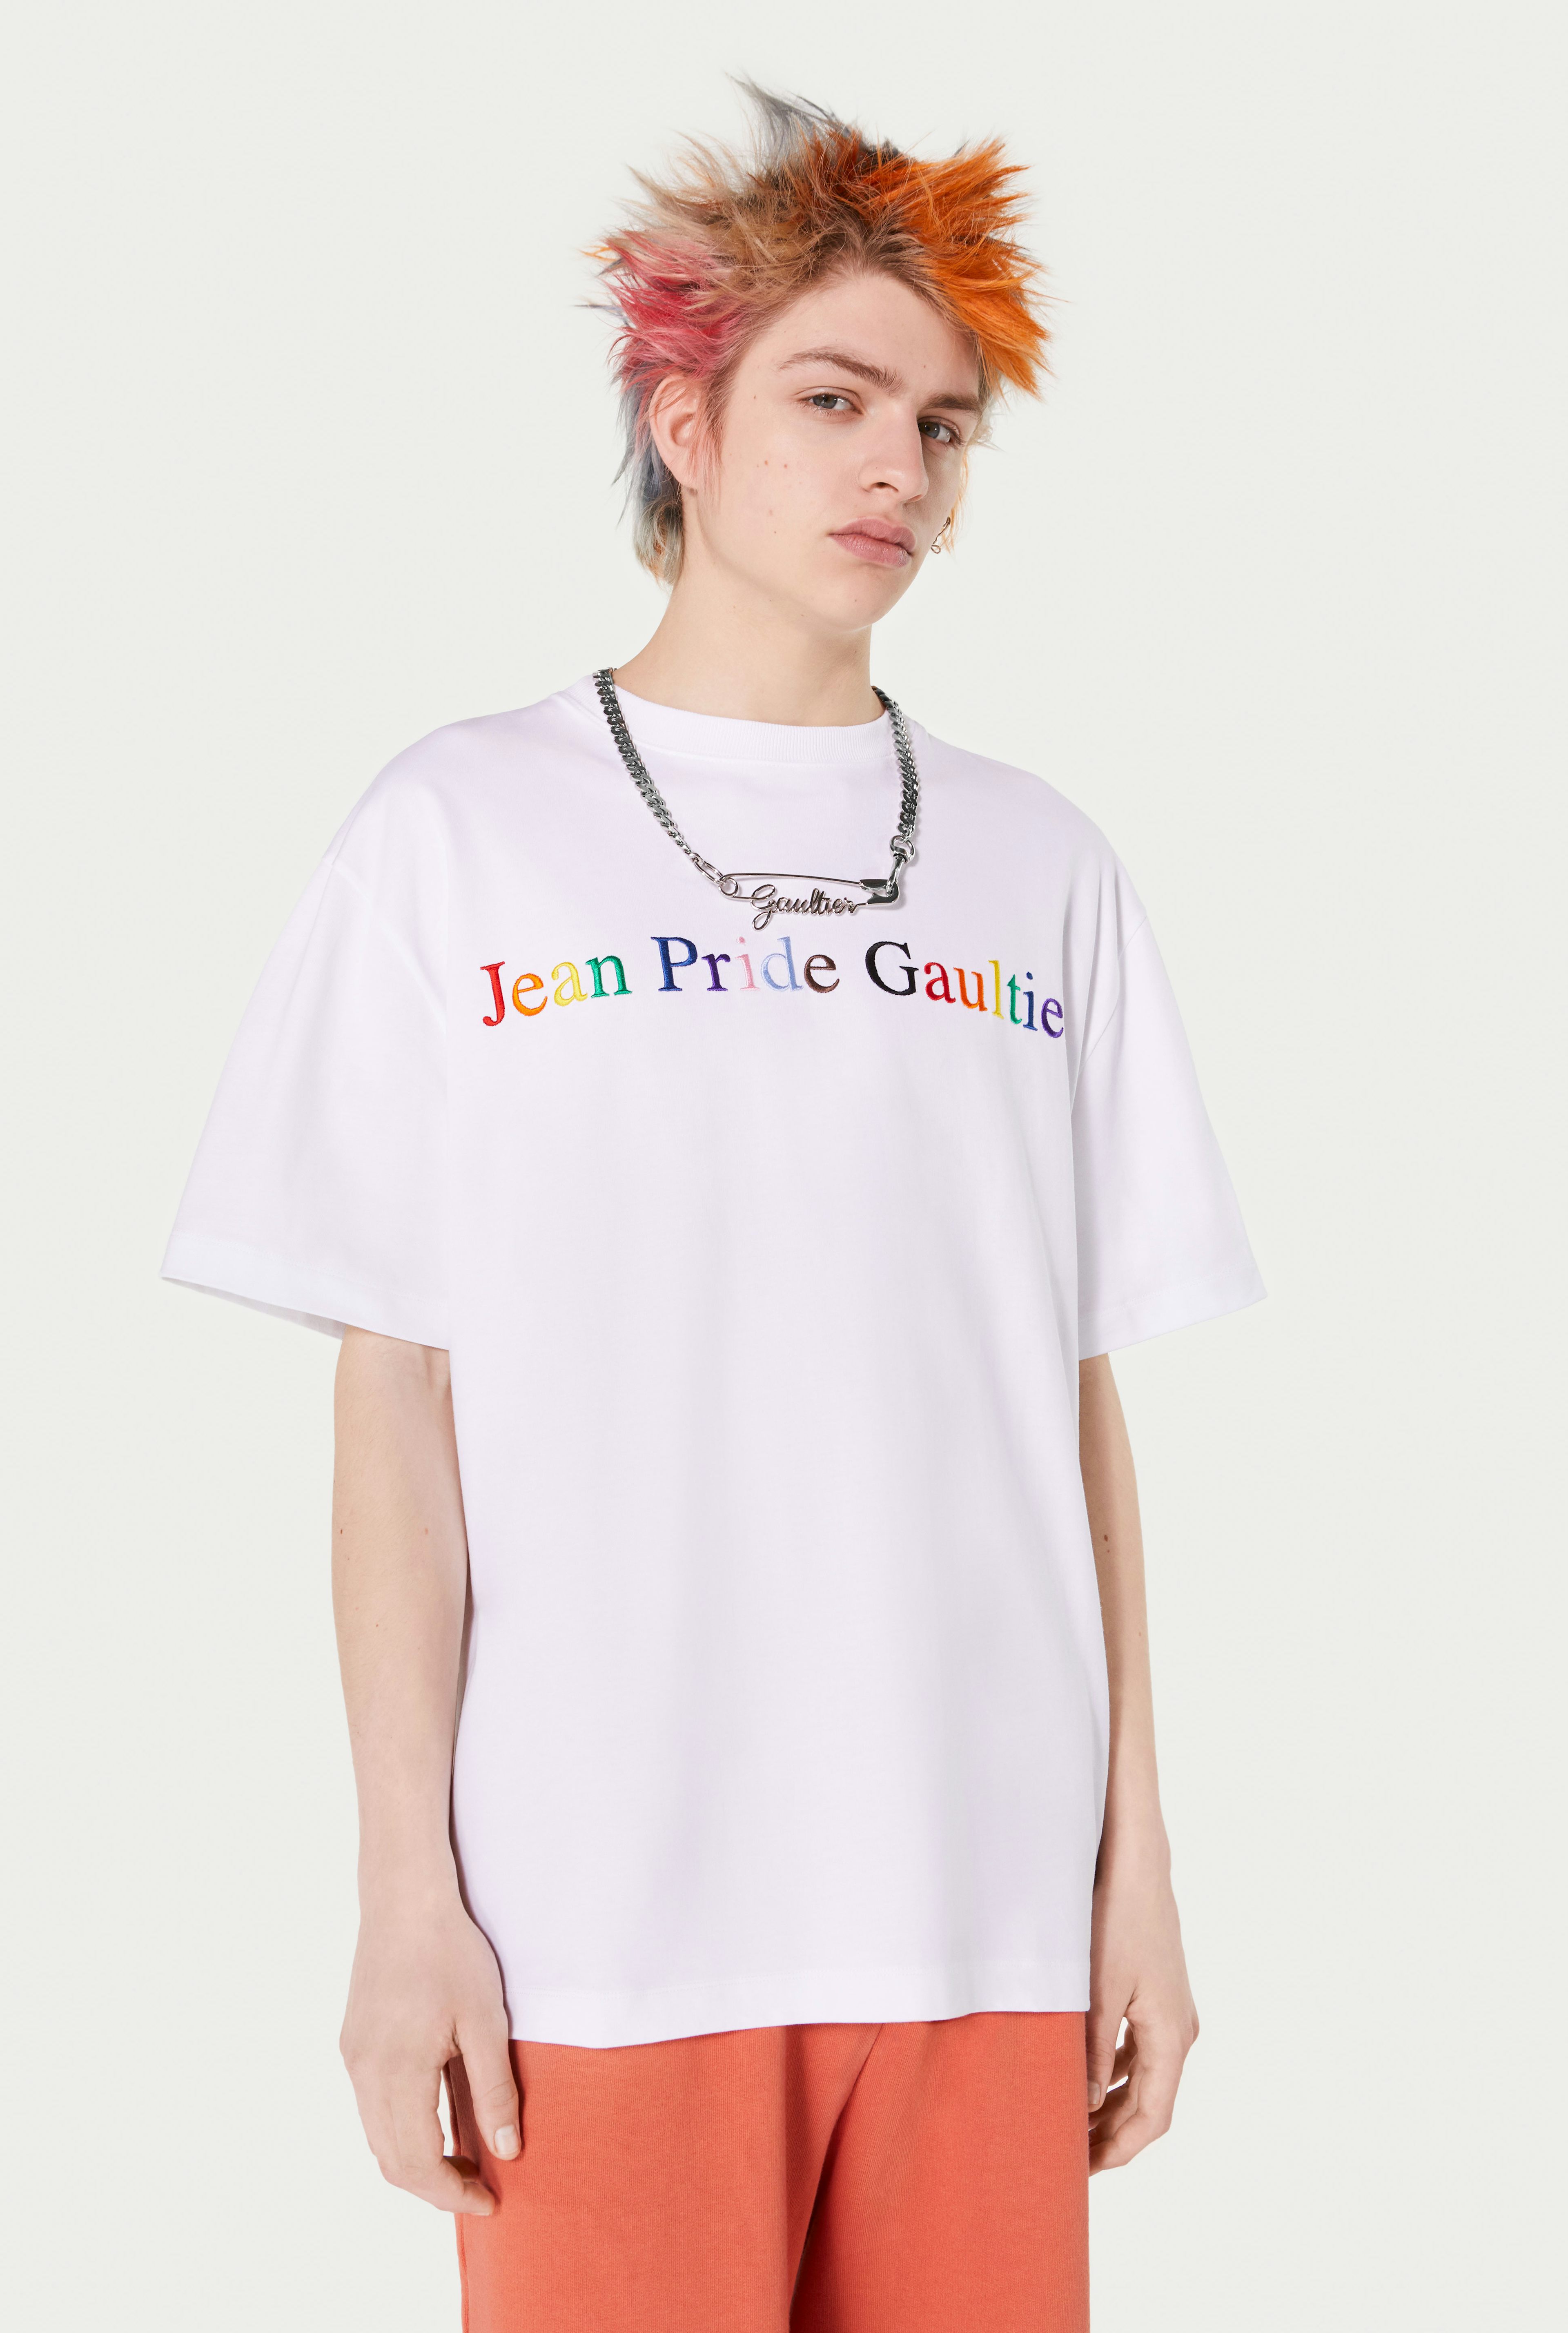 Pride - The Jean Pride Gaultier T-Shirt